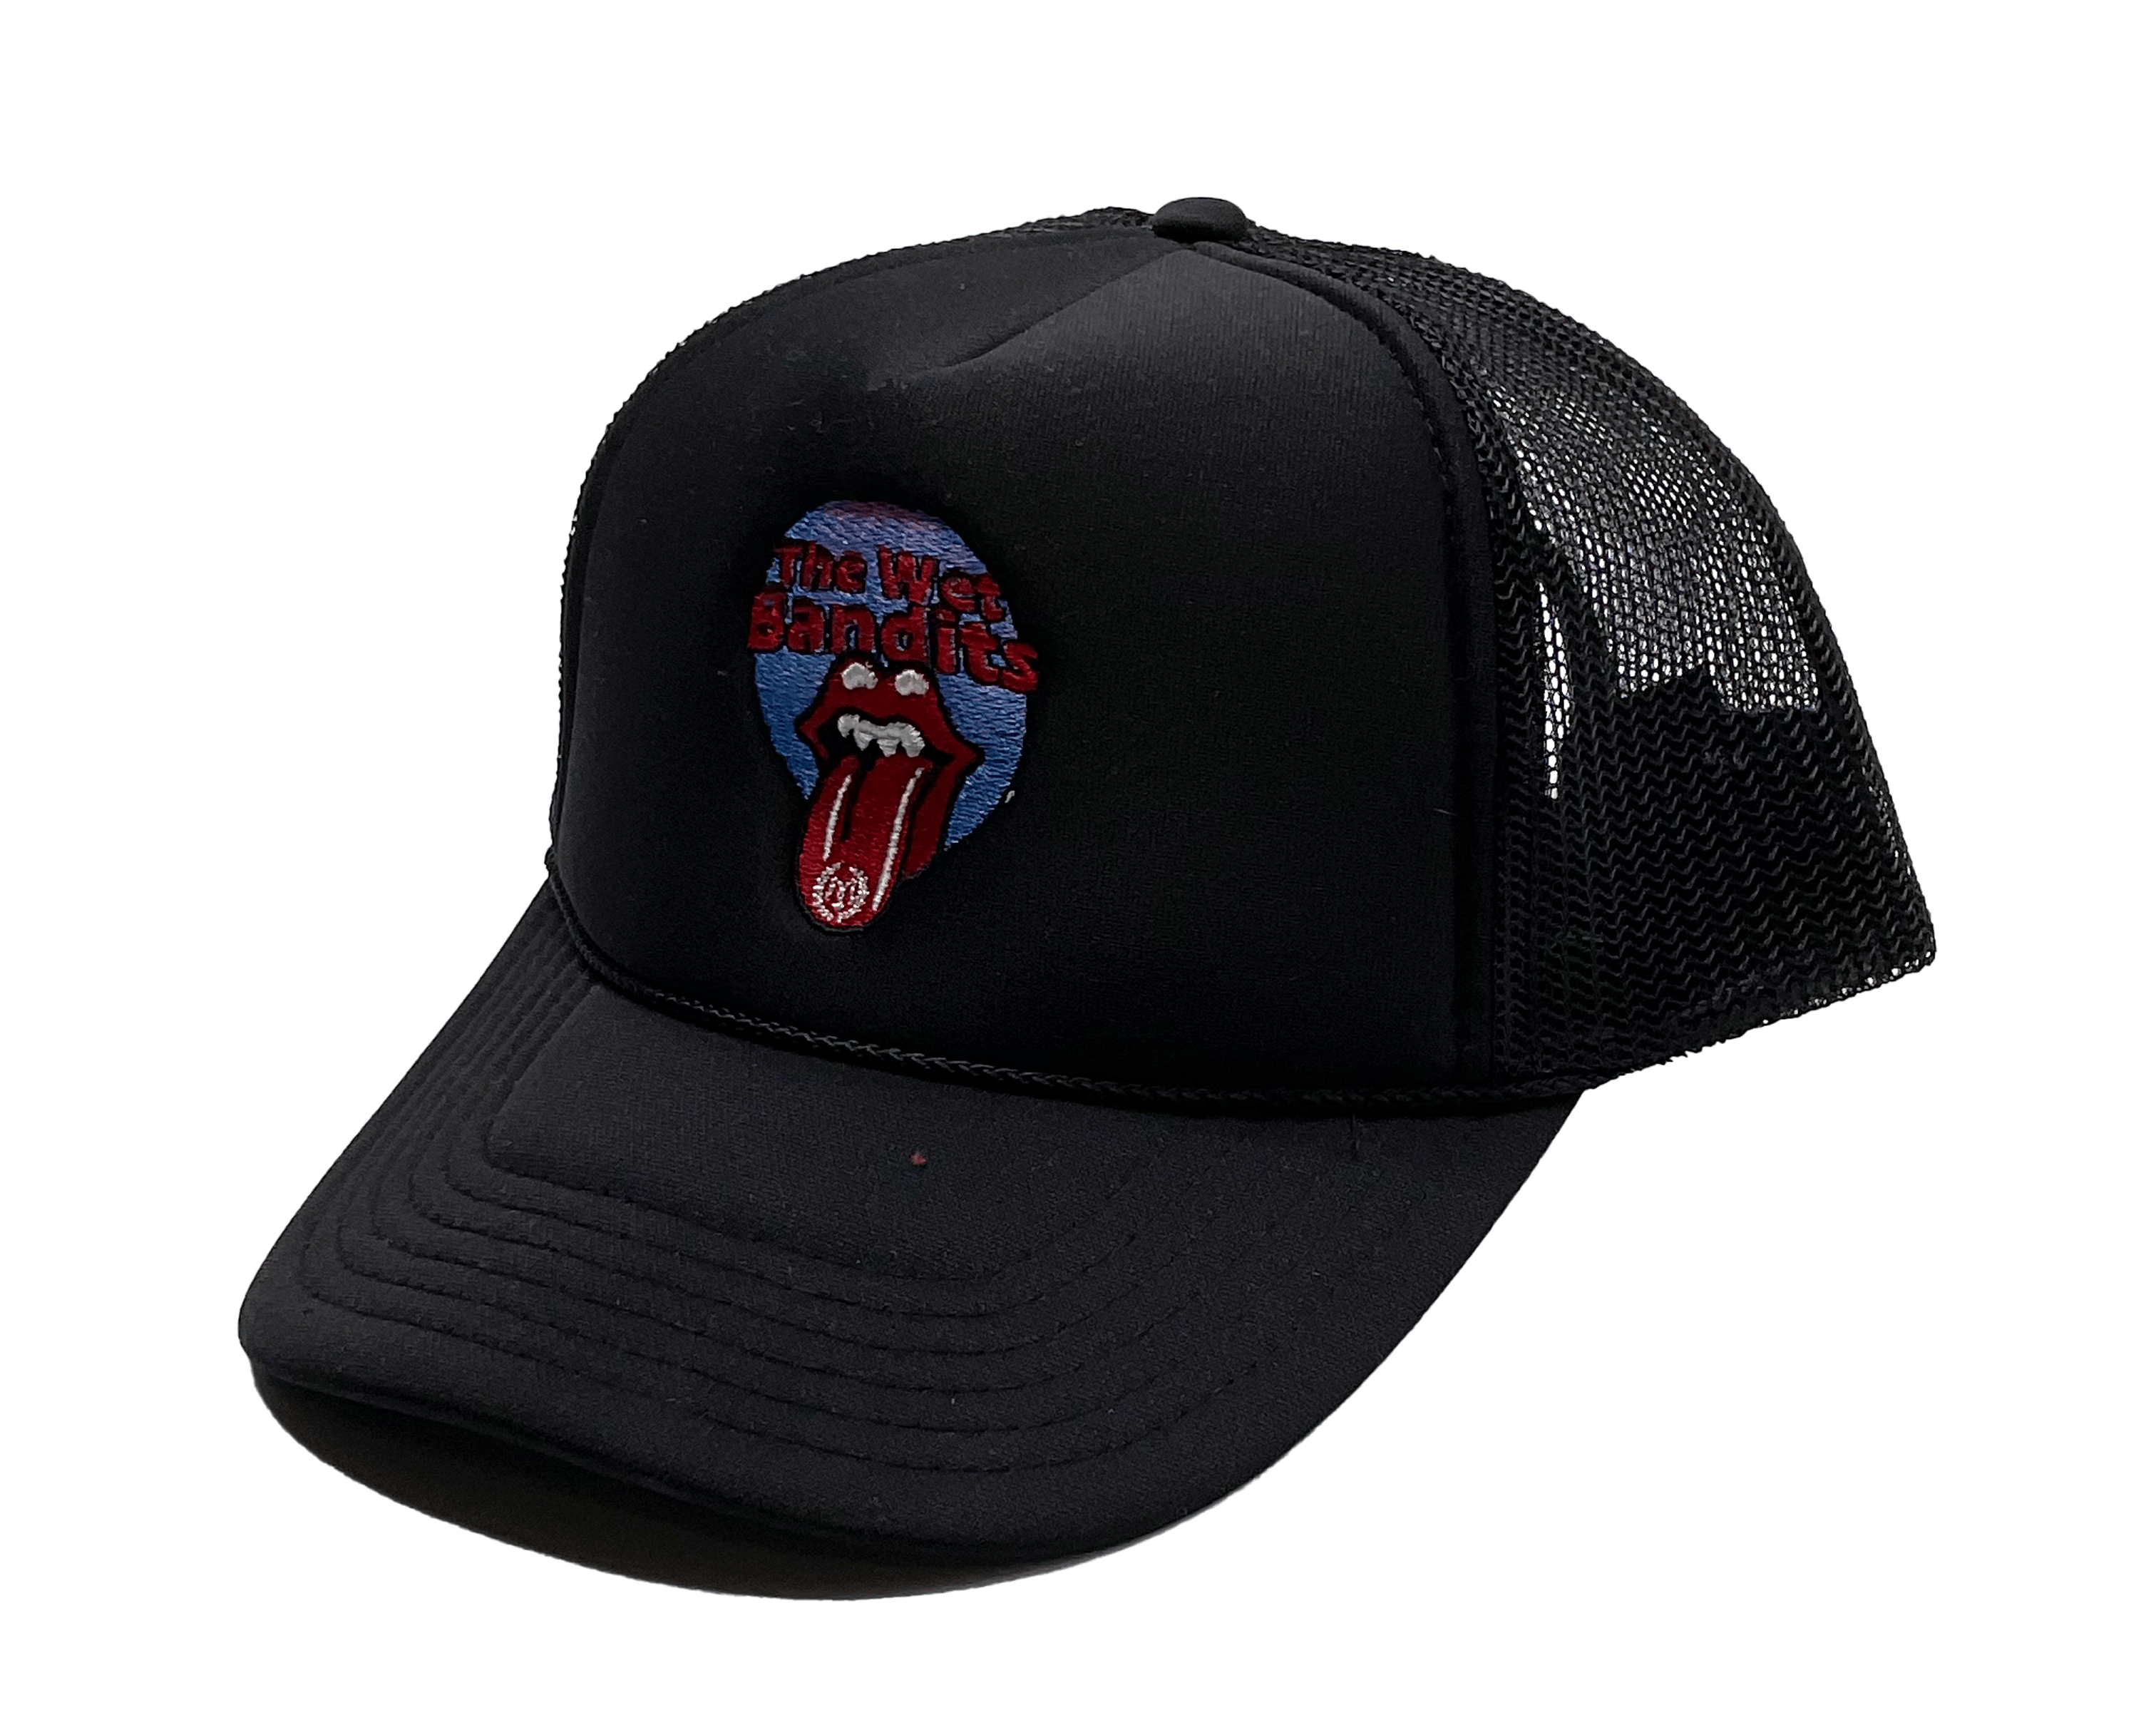 Mastermind315 Black Bandit trucker cap